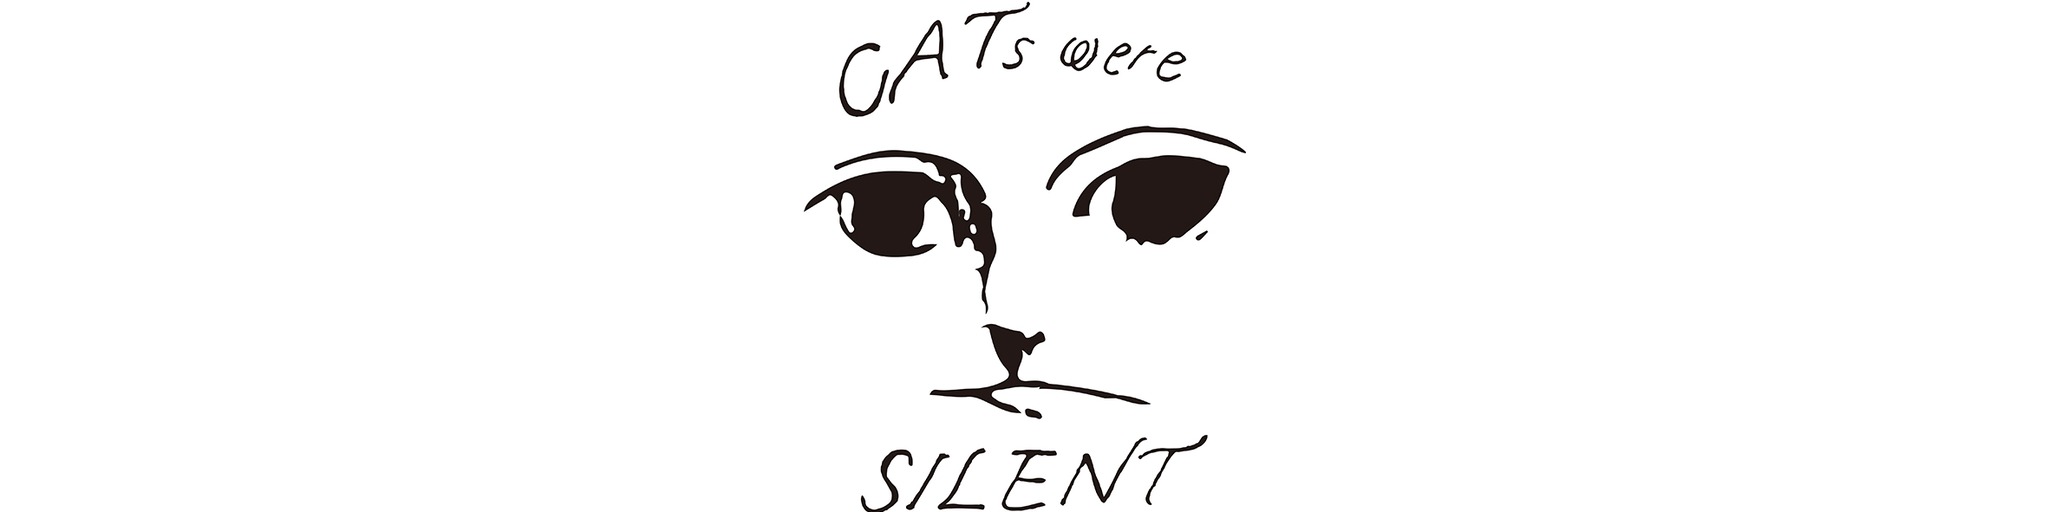 CATs were SILENT